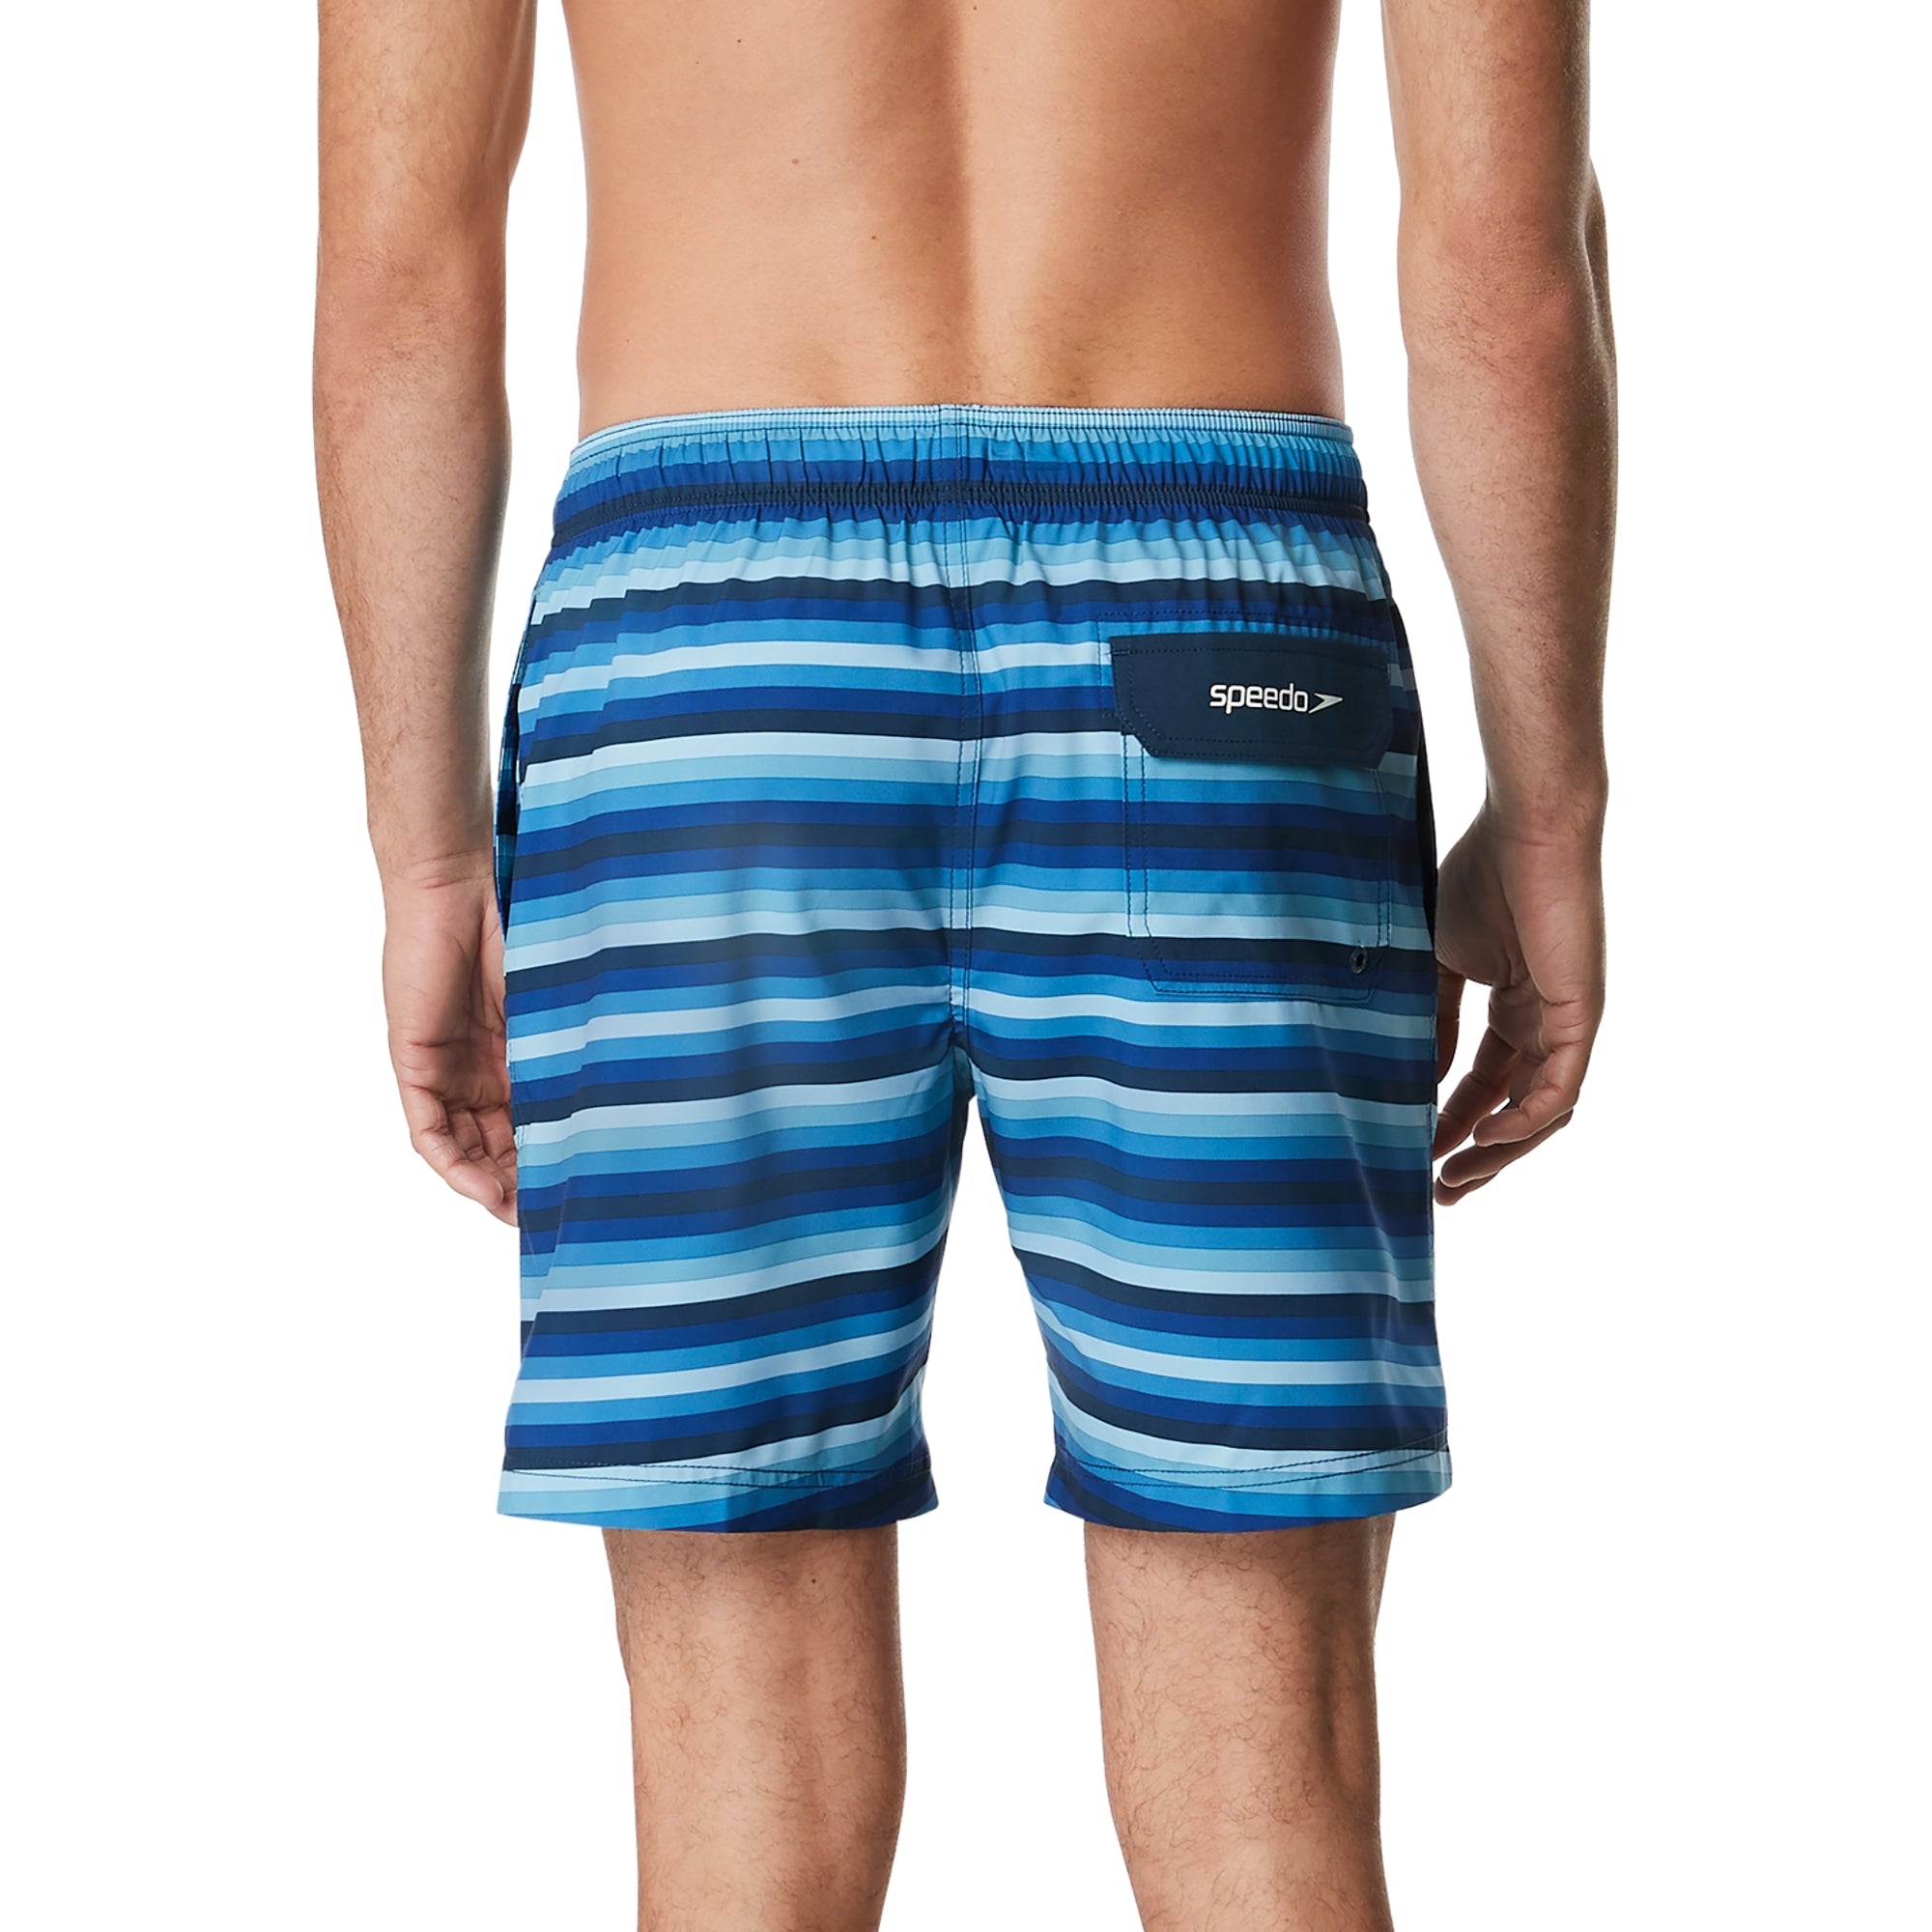 Speedo Blue Striped  Men's Swim Trunks